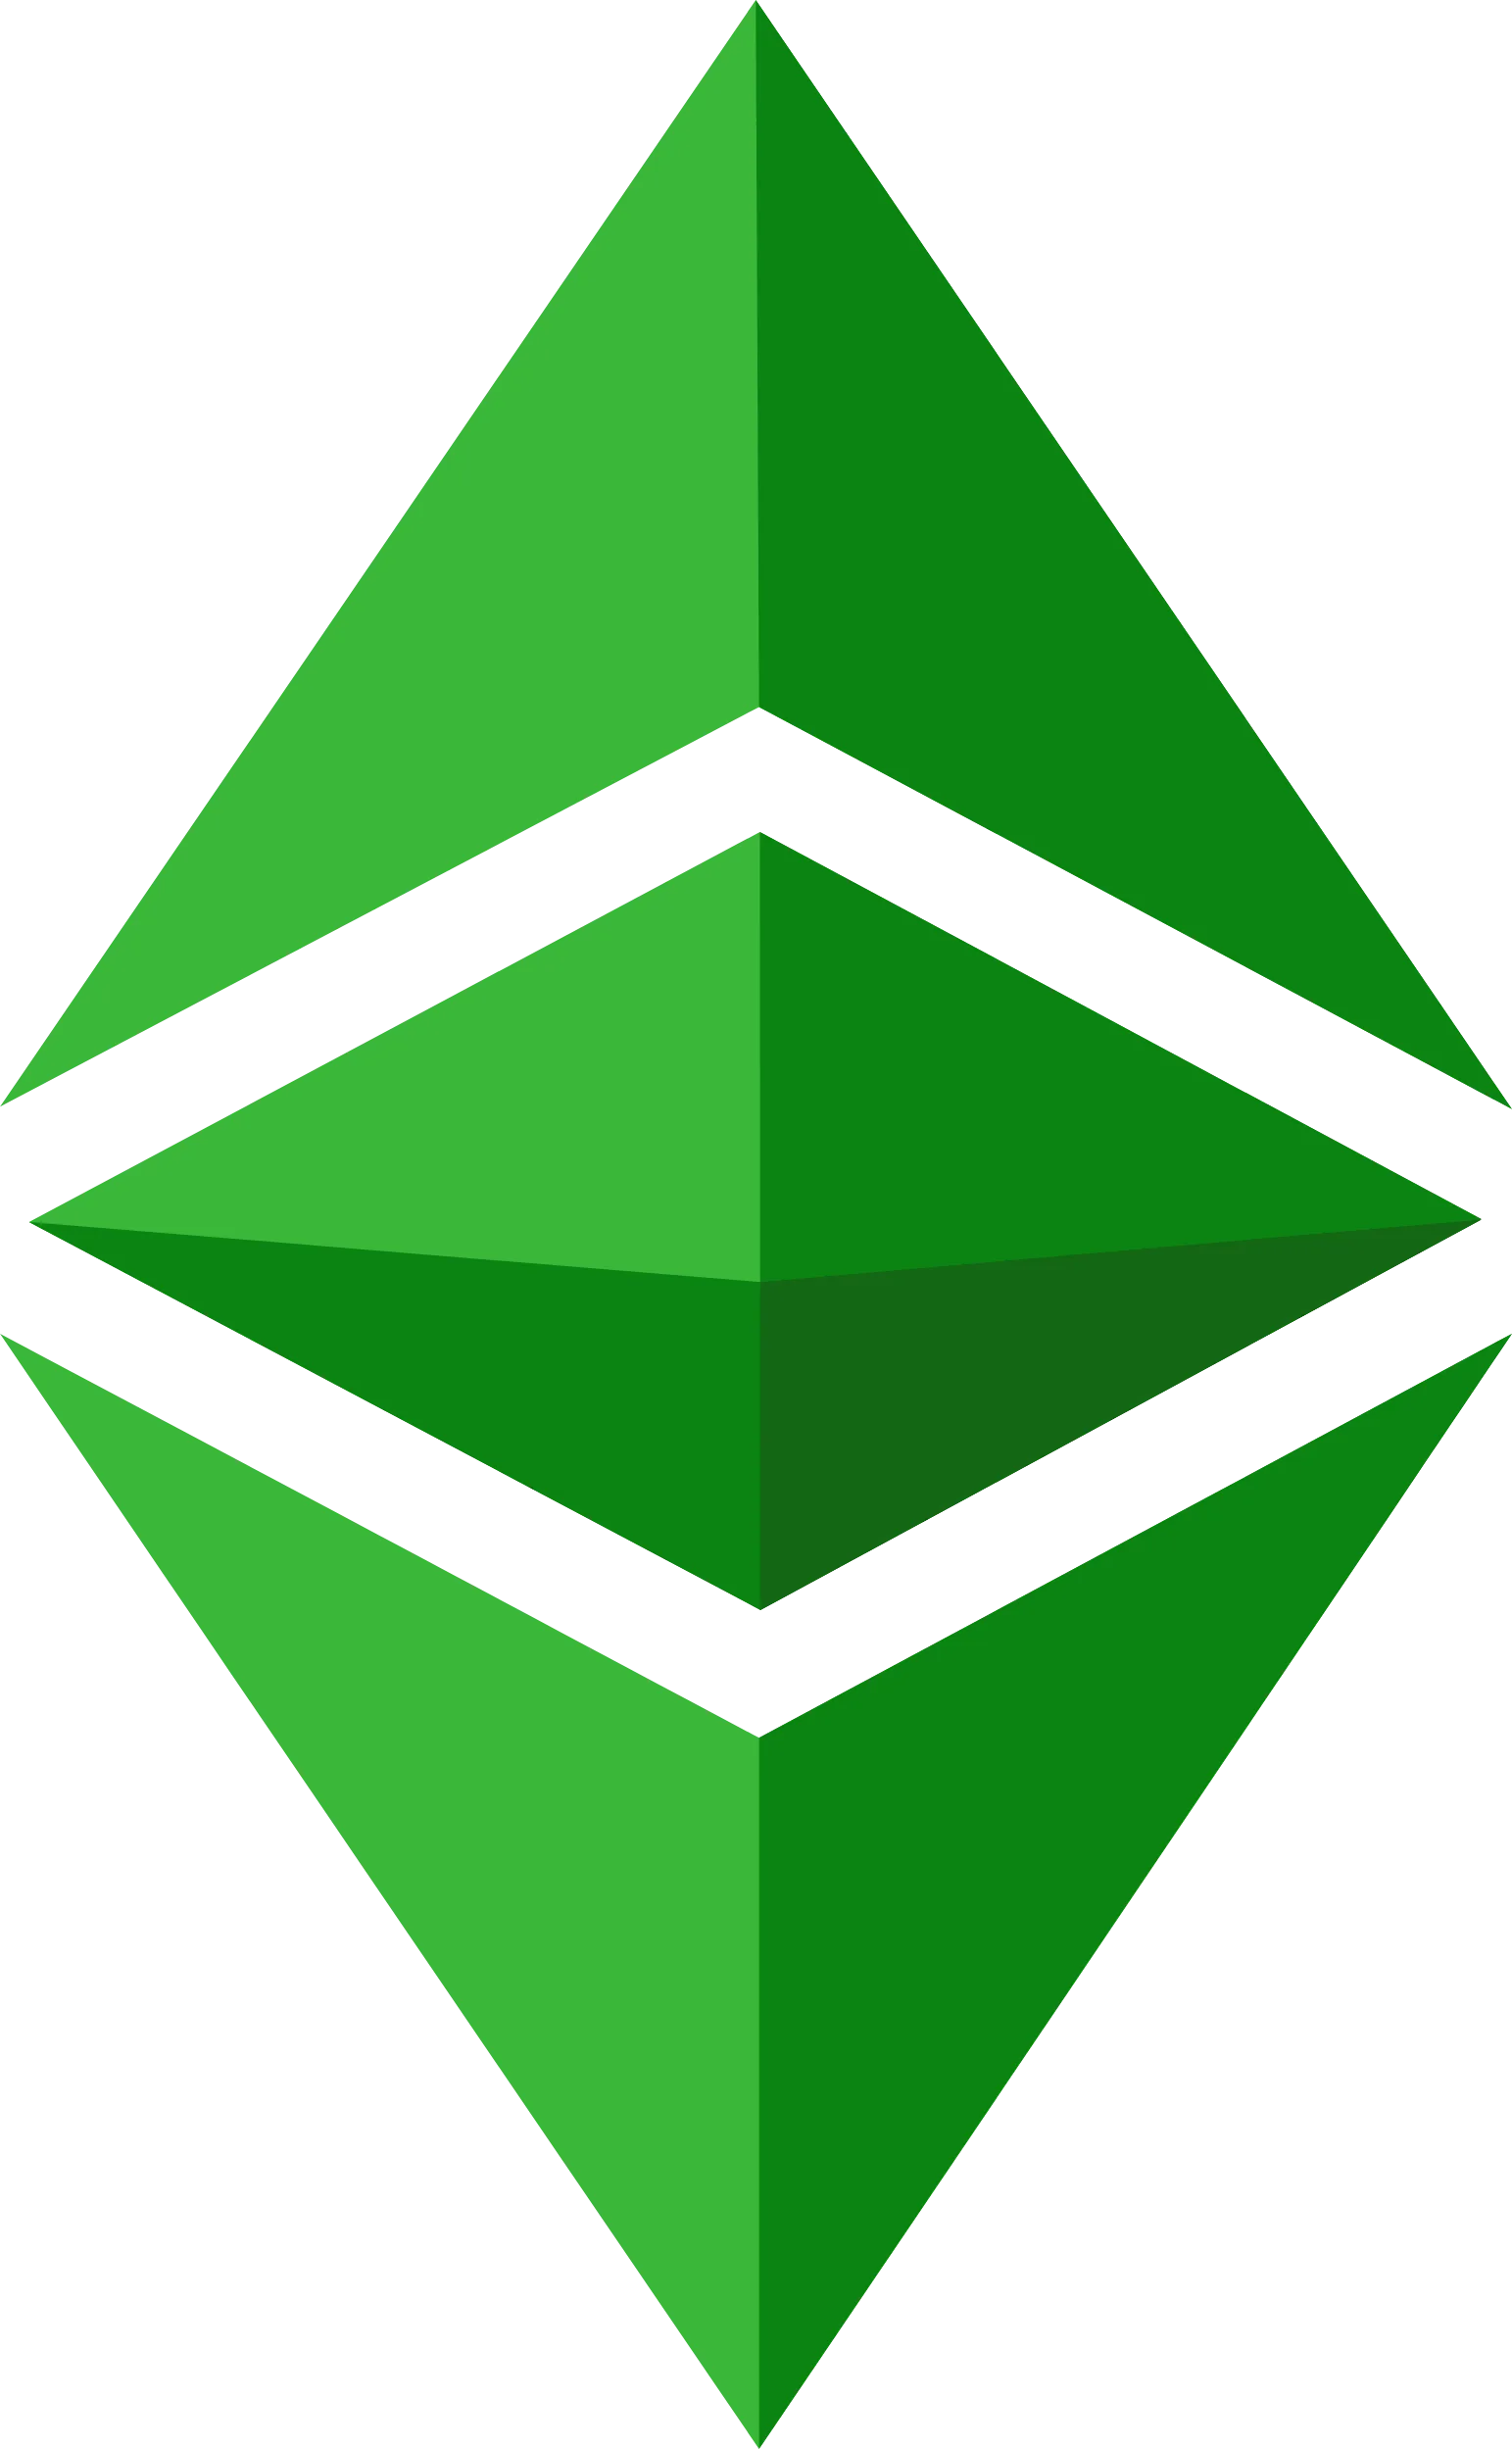 Ethereum Classic logo in svg format